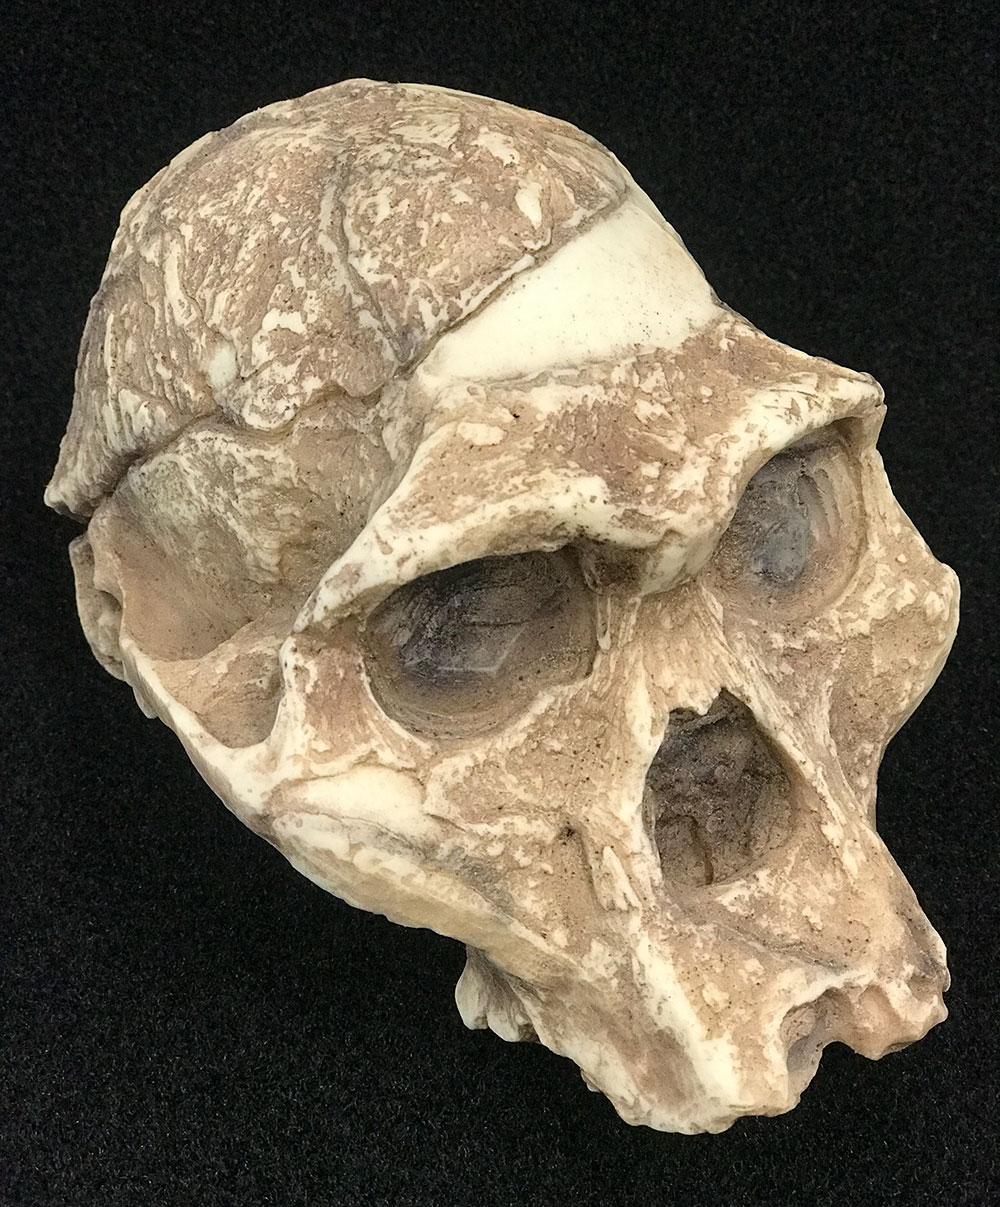 Lateral Australopithecus africanus skull